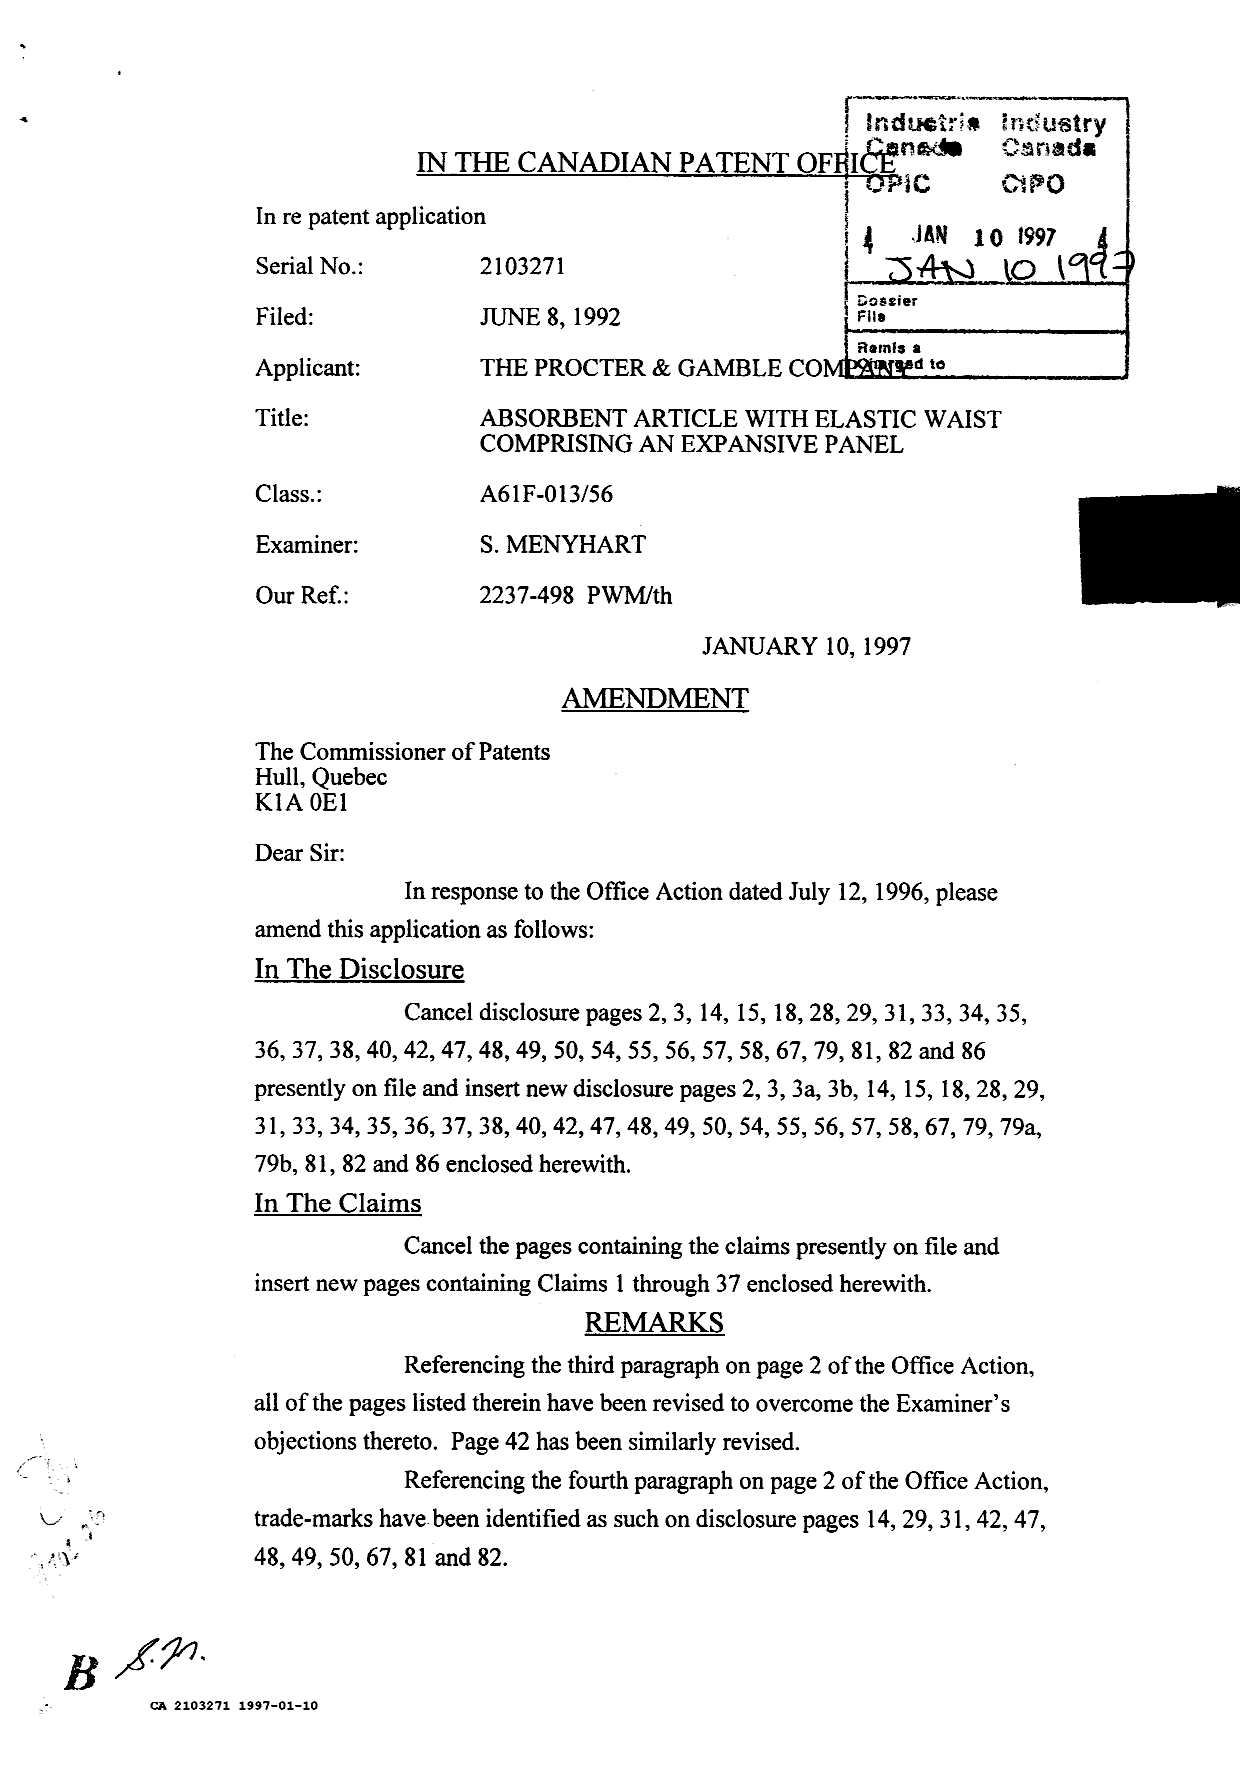 Canadian Patent Document 2103271. Prosecution Correspondence 19970110. Image 1 of 5